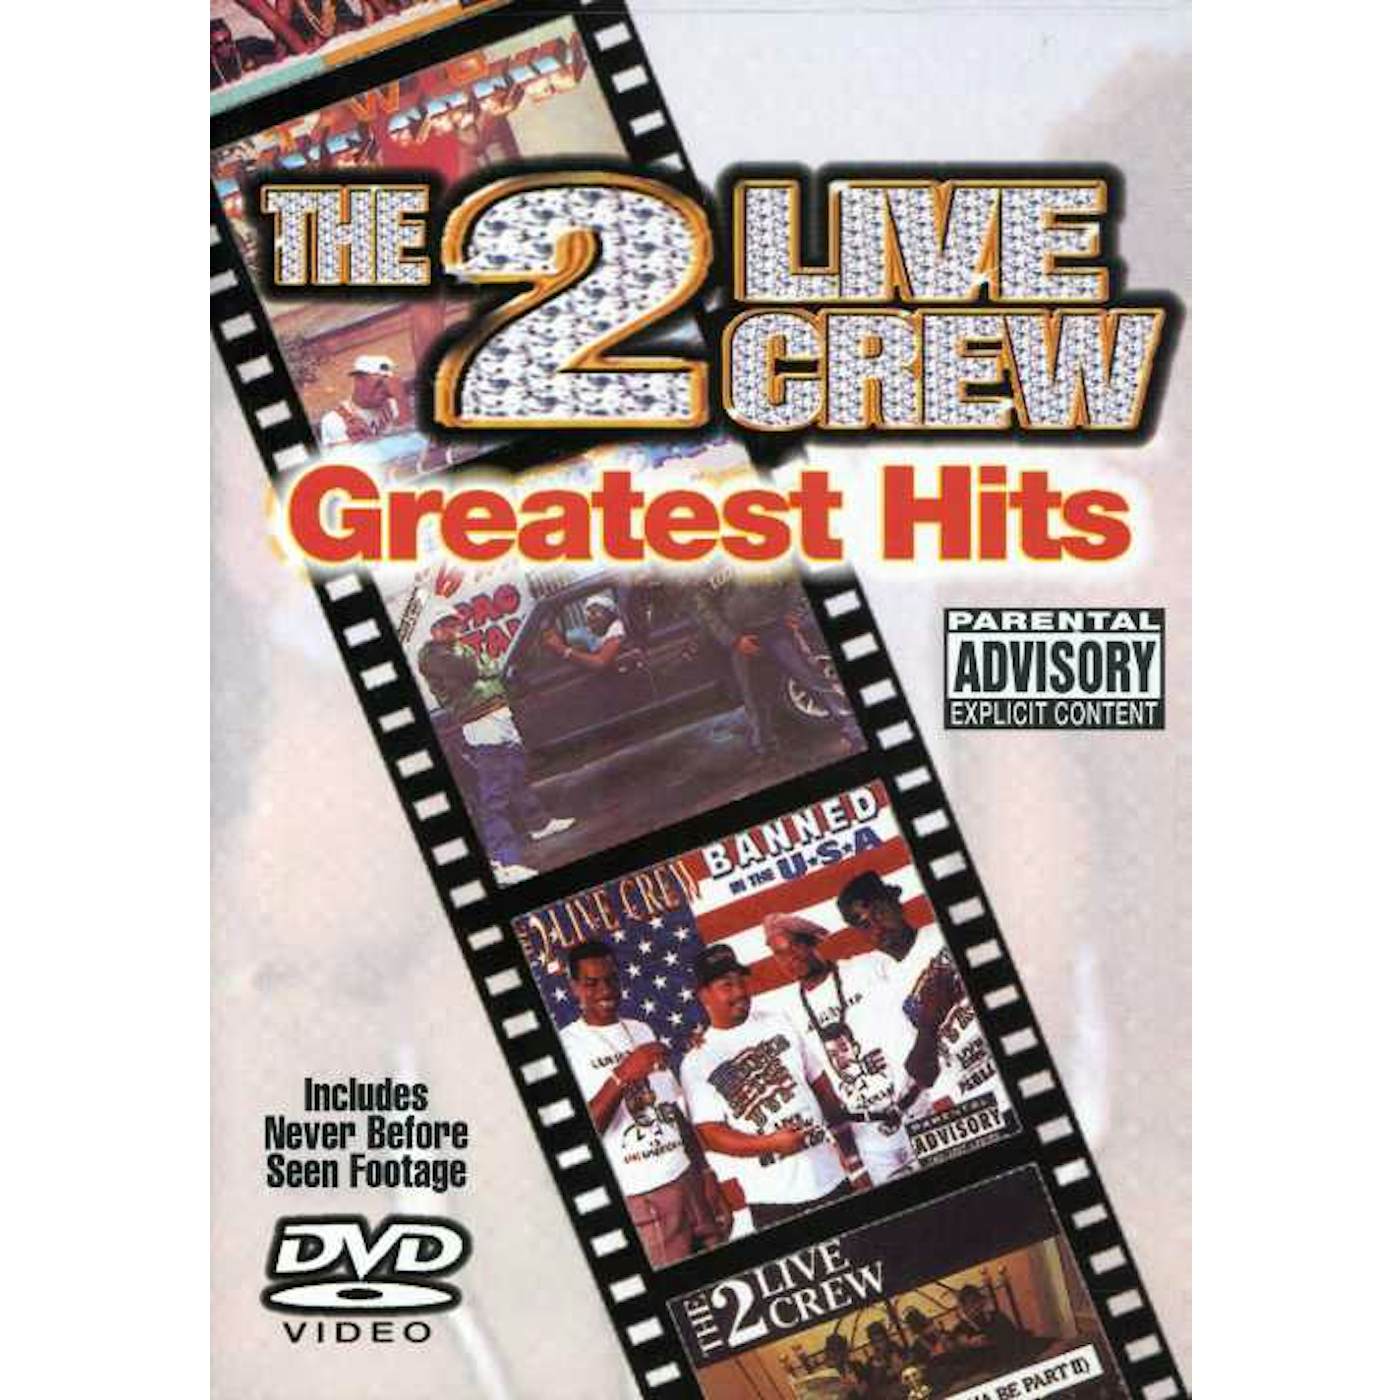 2 LIVE CREW GREATEST HITS DVD DVD